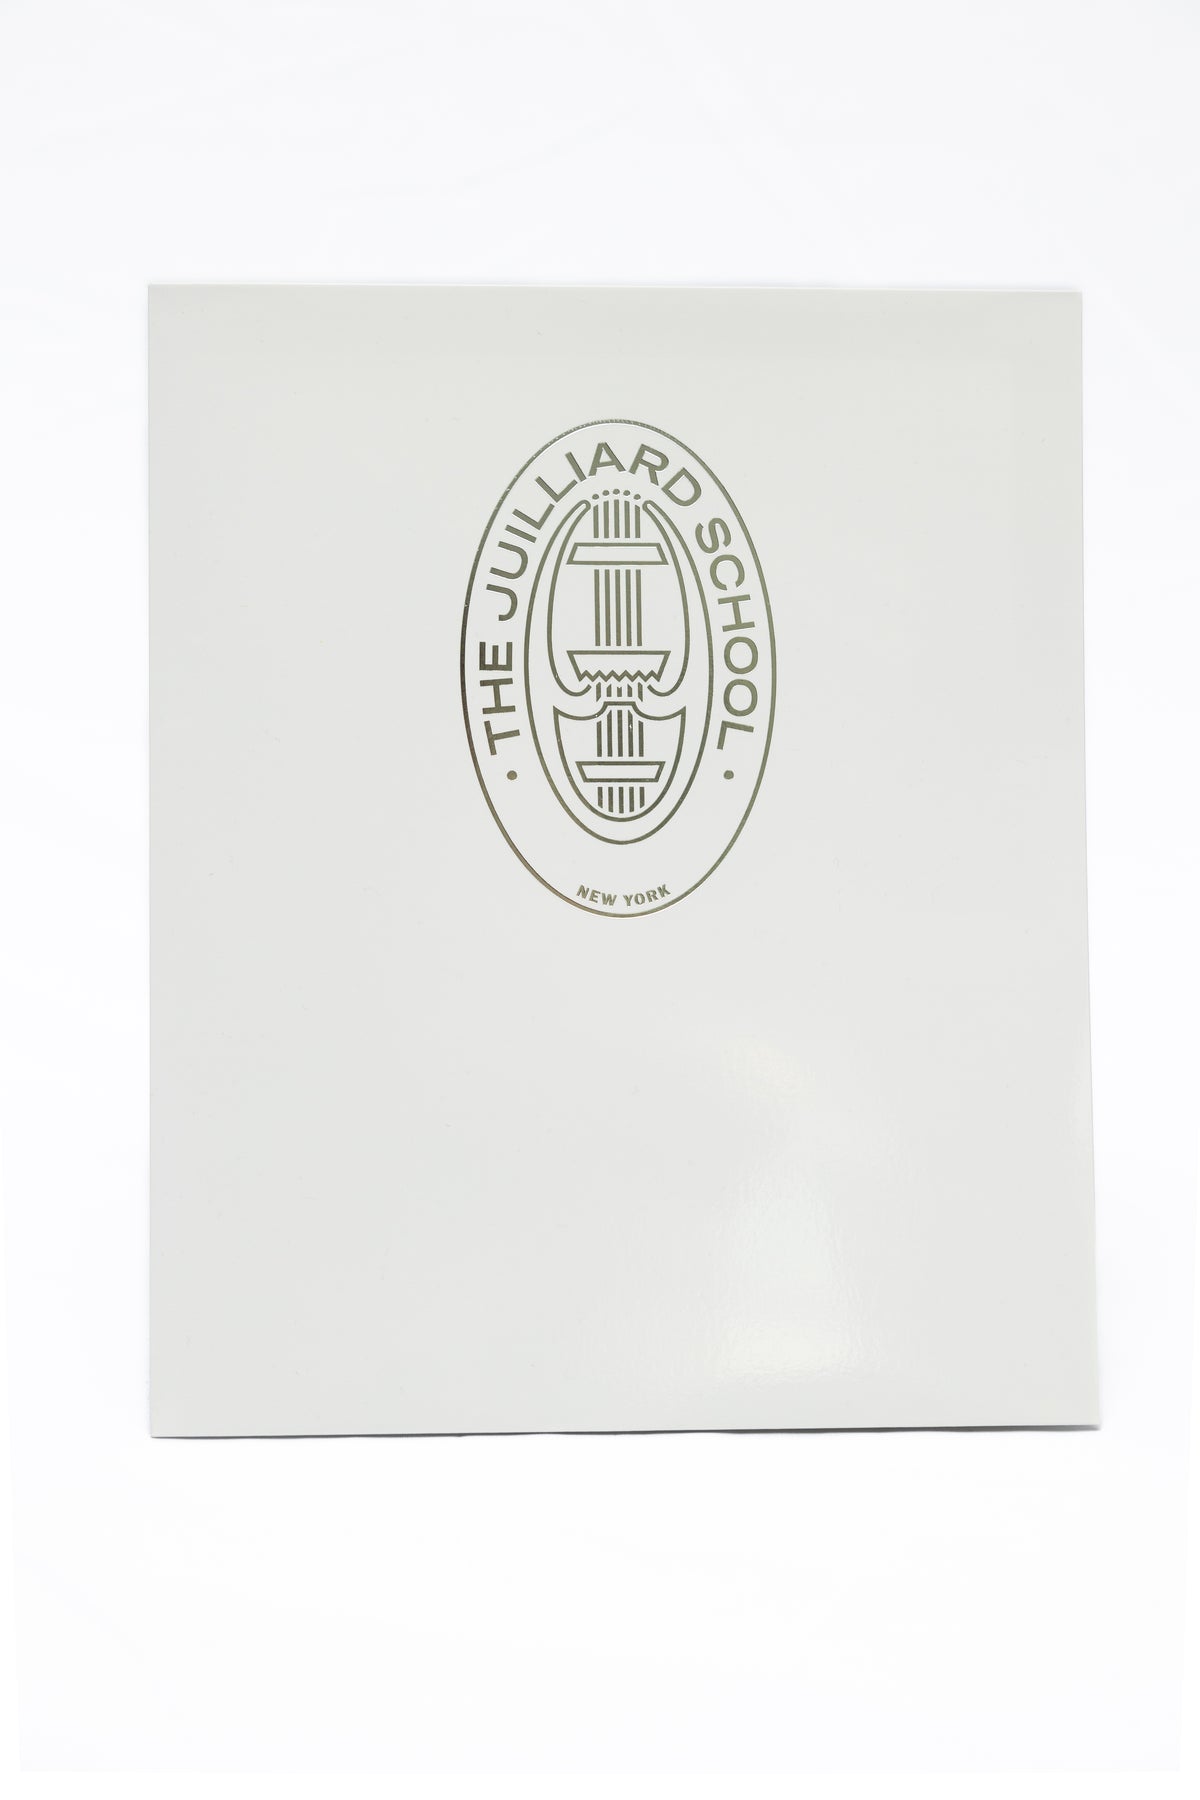 Folder: Juilliard Seal foil printed